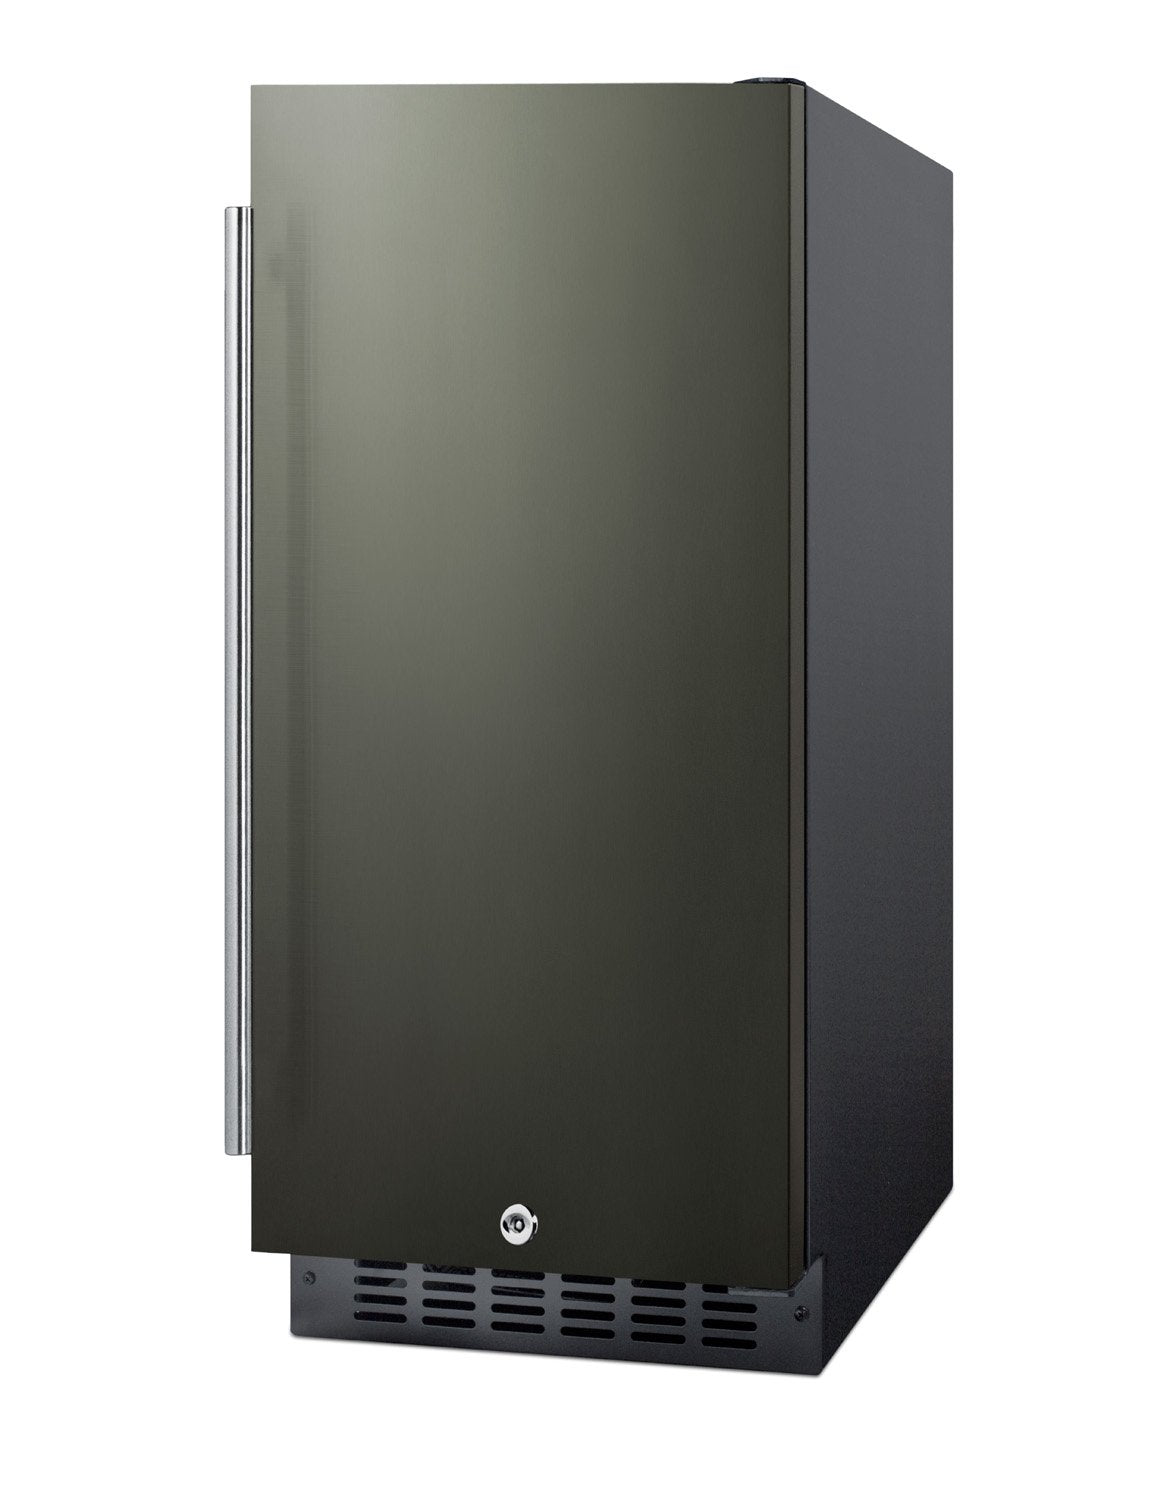 SUMMIT 15 in. Built-In All-Refrigerator (FF1532B)